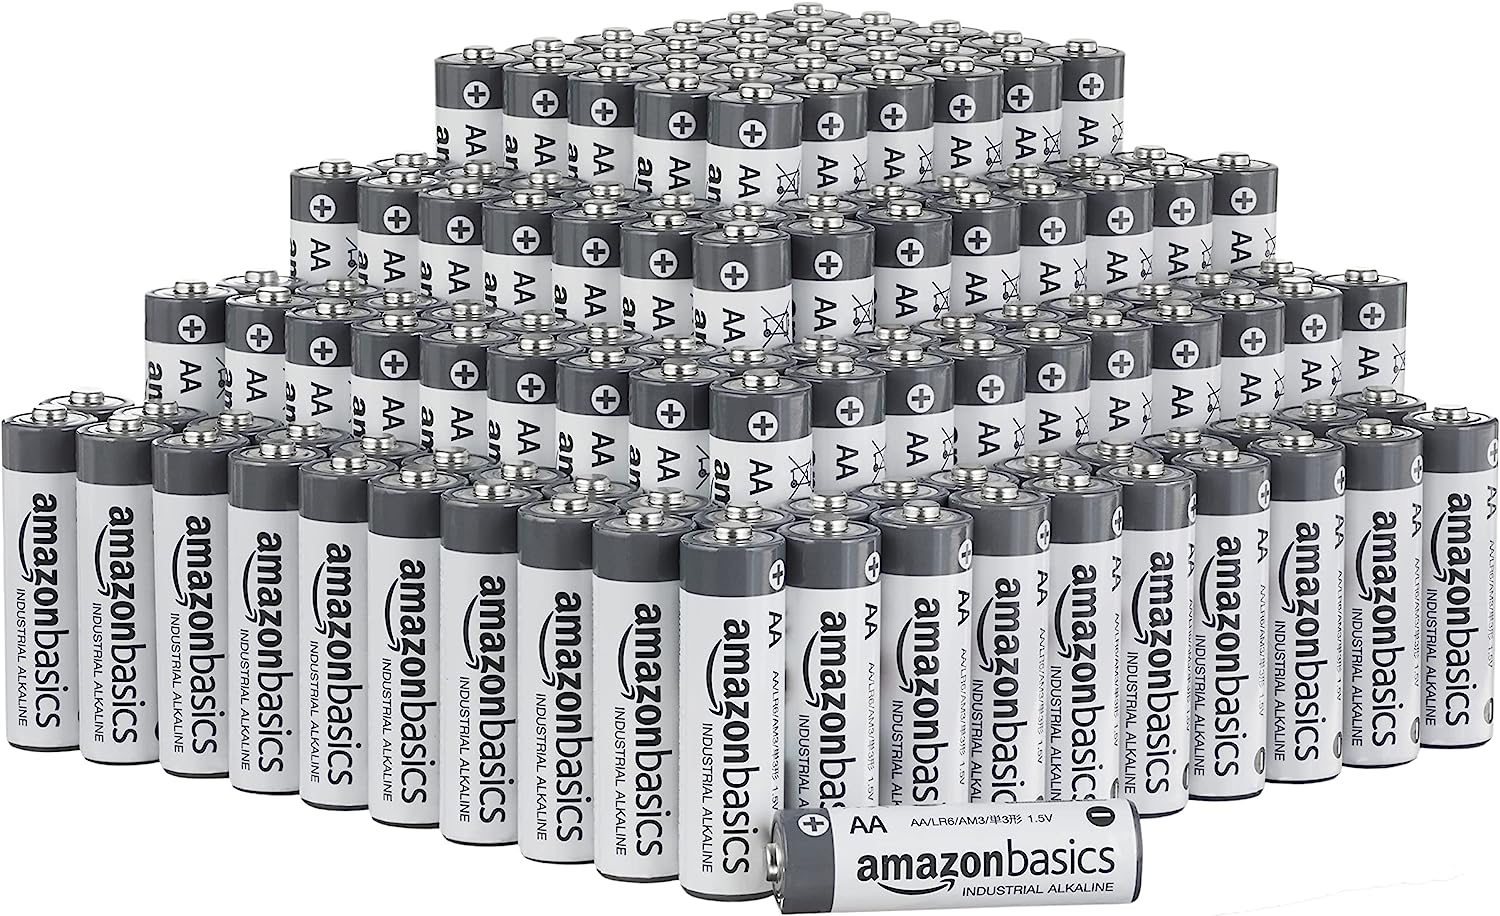 YMMV $25.79 with 40% S&S Amazon Basics 200-Pack AA Alkaline Batteries $25.79